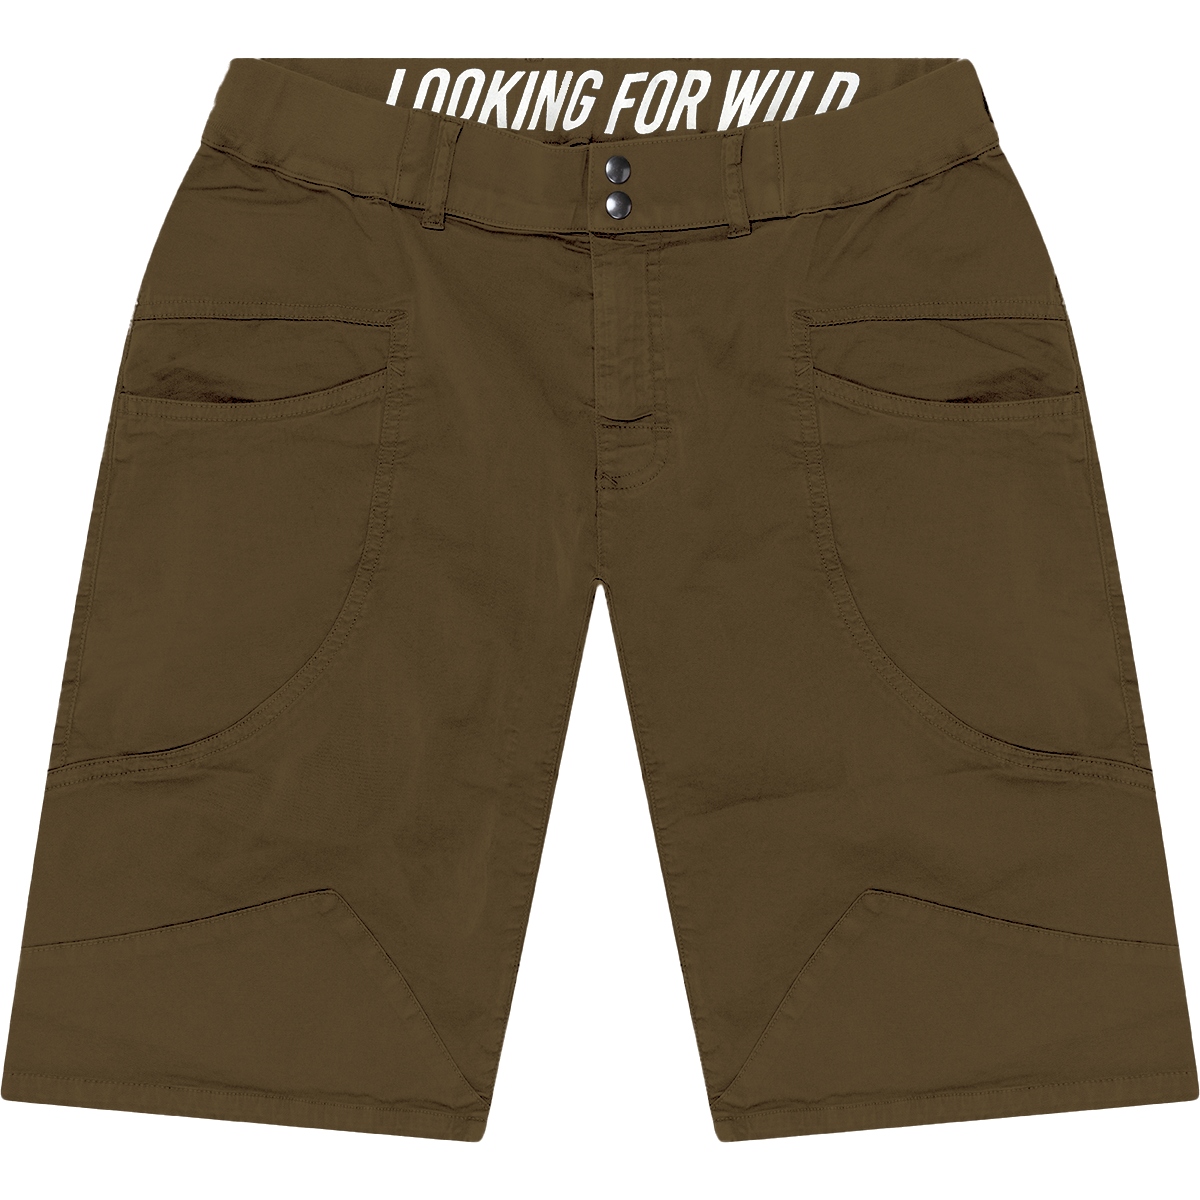 Productfoto van LOOKING FOR WILD Cilaos Shorts Heren - Military Olive